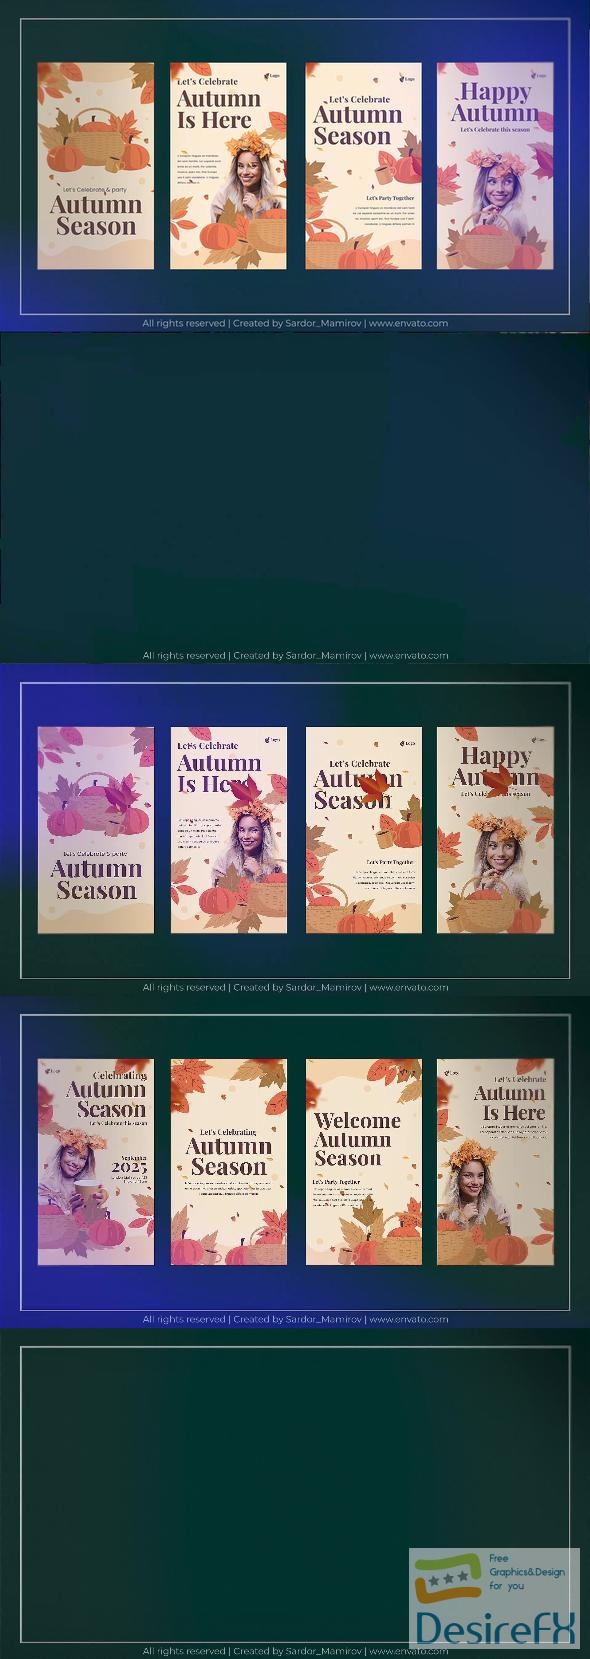 VideoHive Autumn season instagram stories 47581961